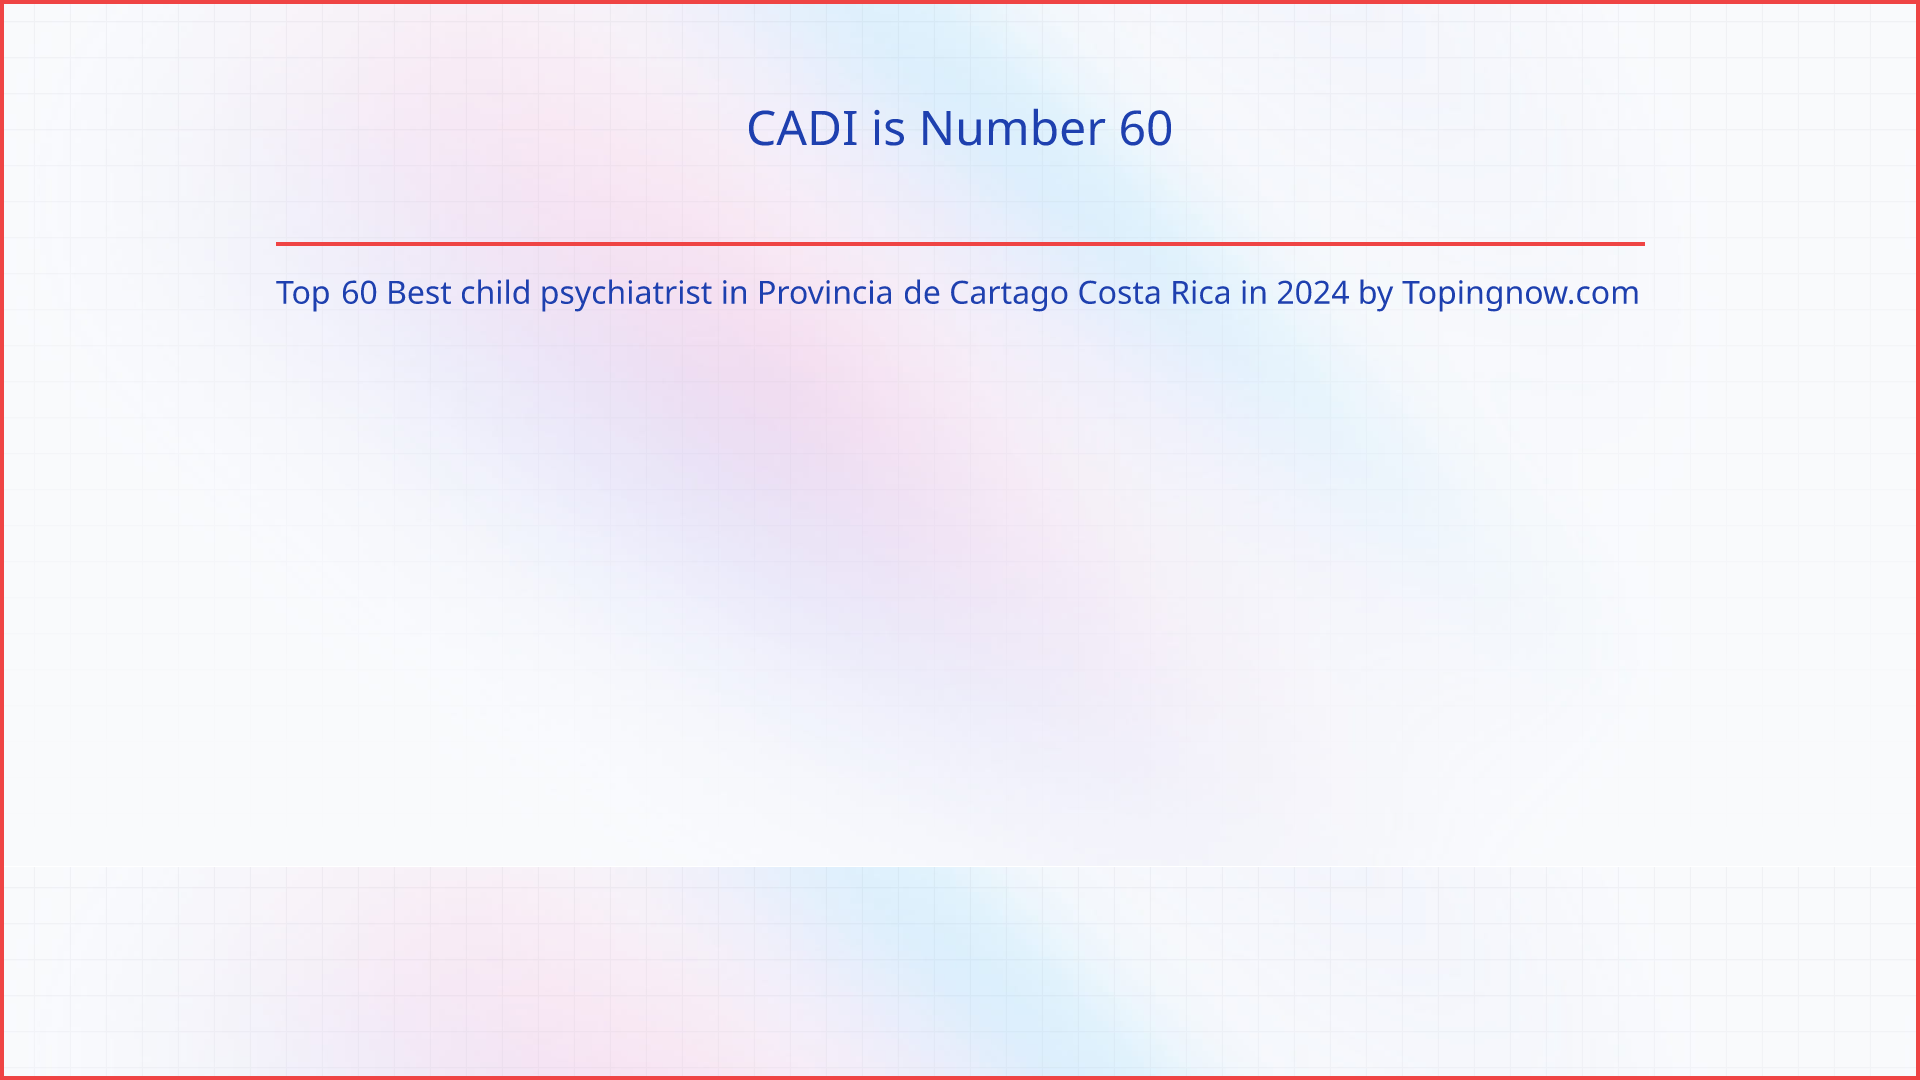 CADI: Top 60 Best child psychiatrist in Provincia de Cartago Costa Rica in 2024